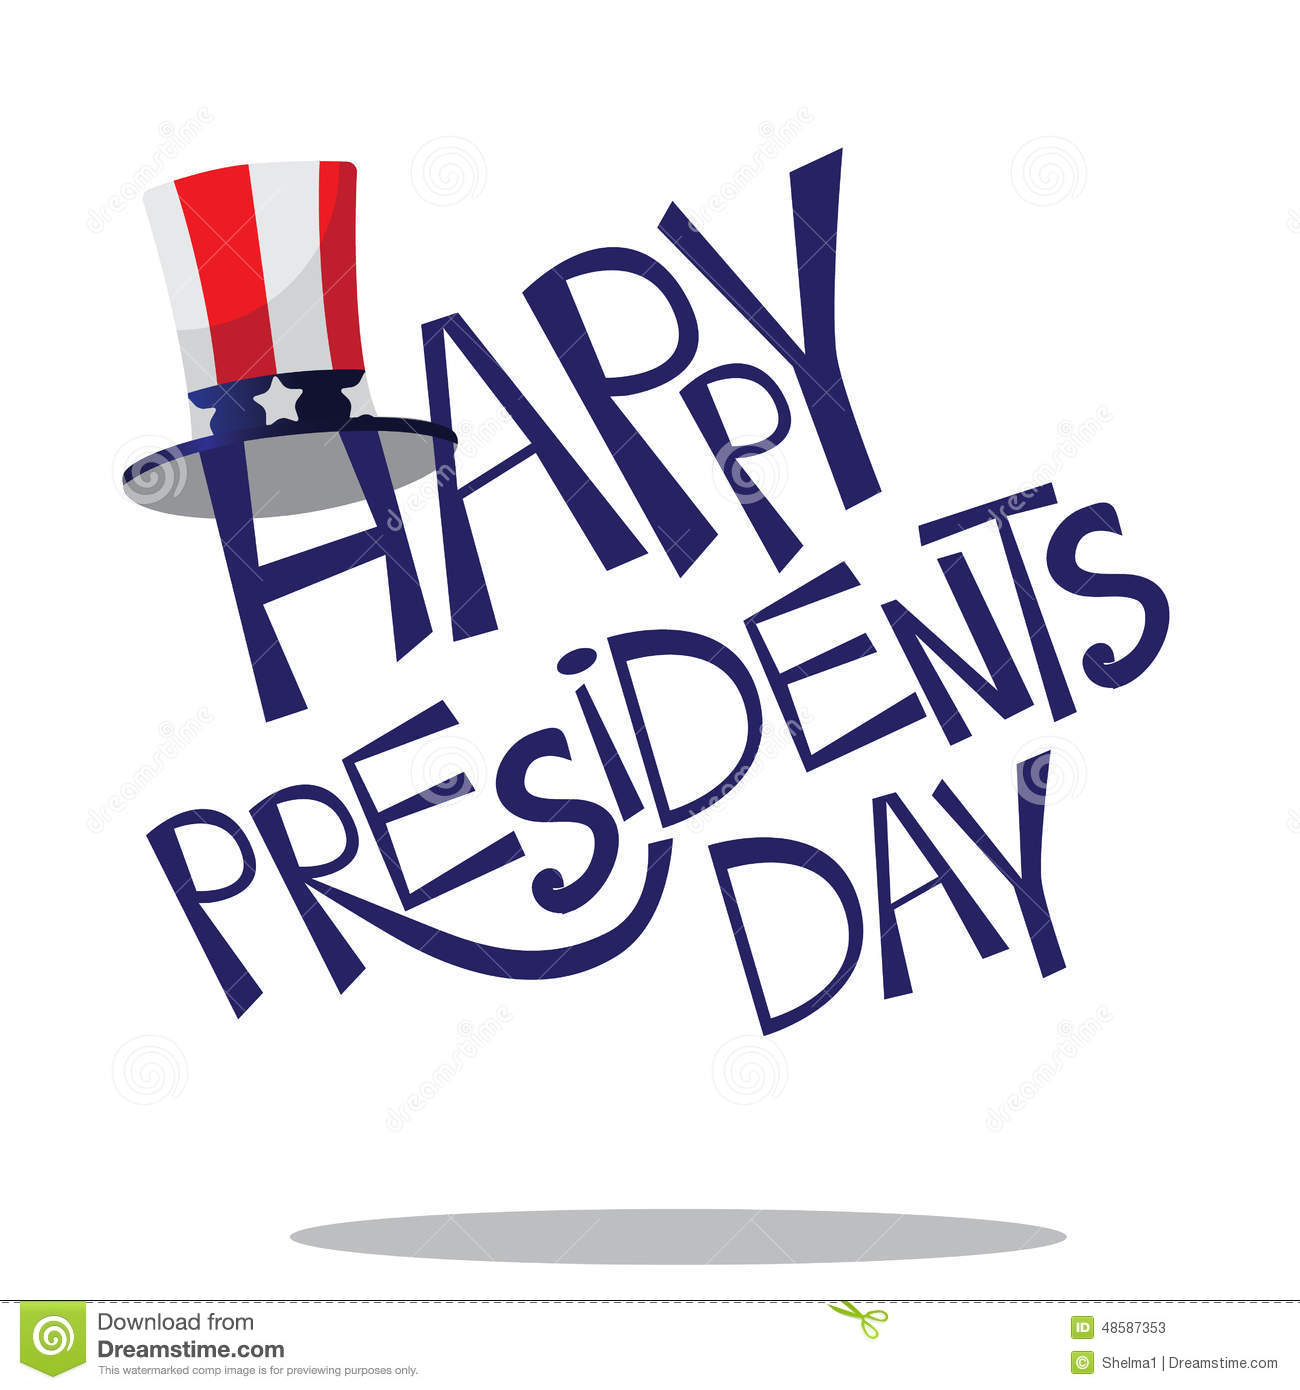 Presidents' Day #6